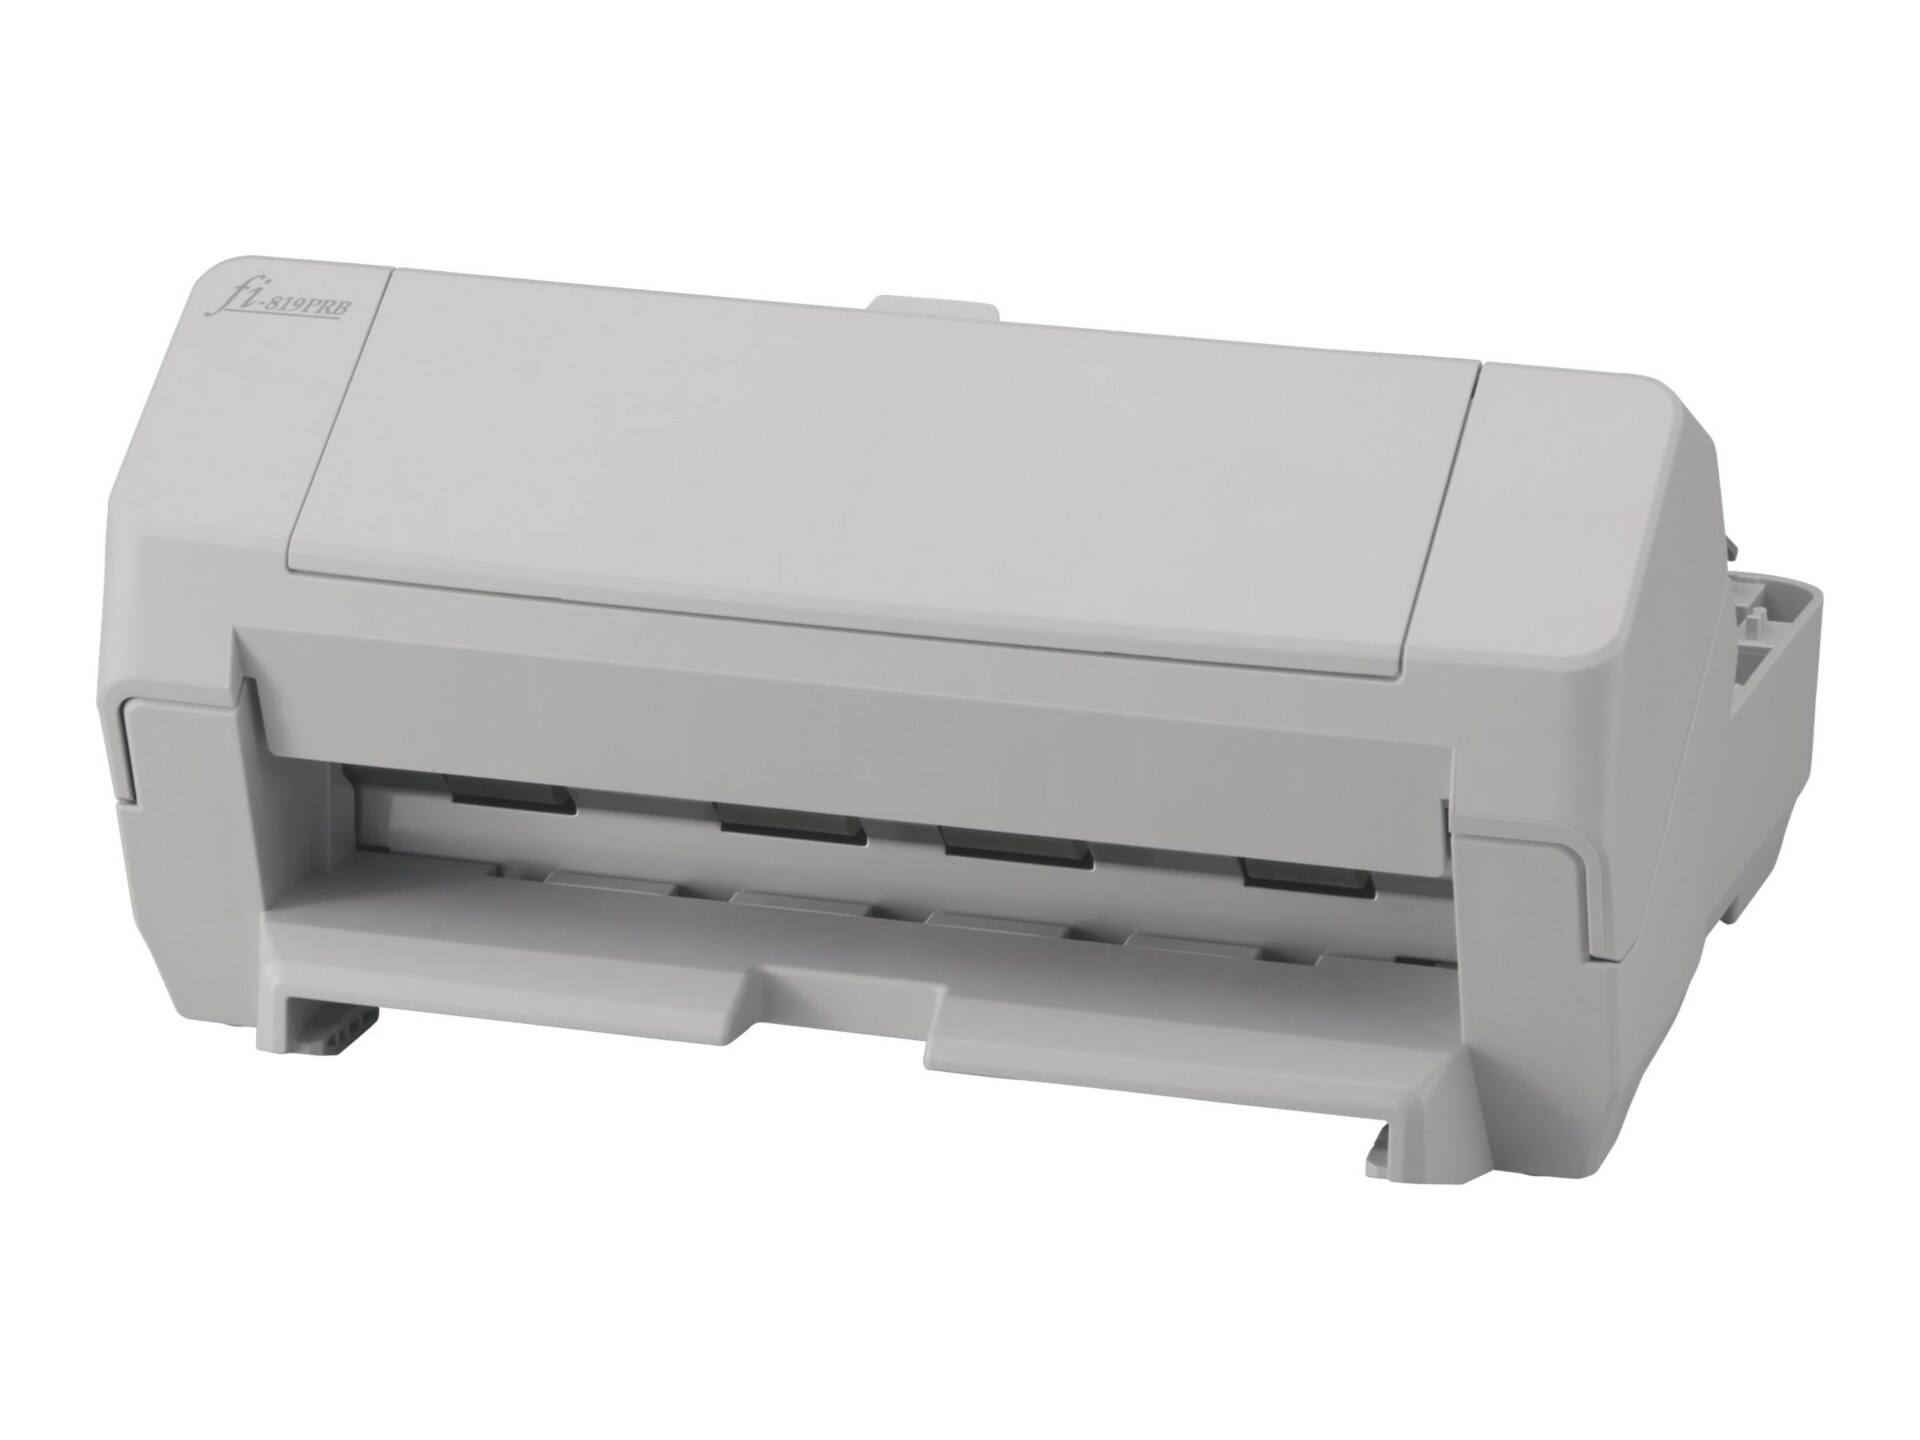 Ricoh scanner post imprinter